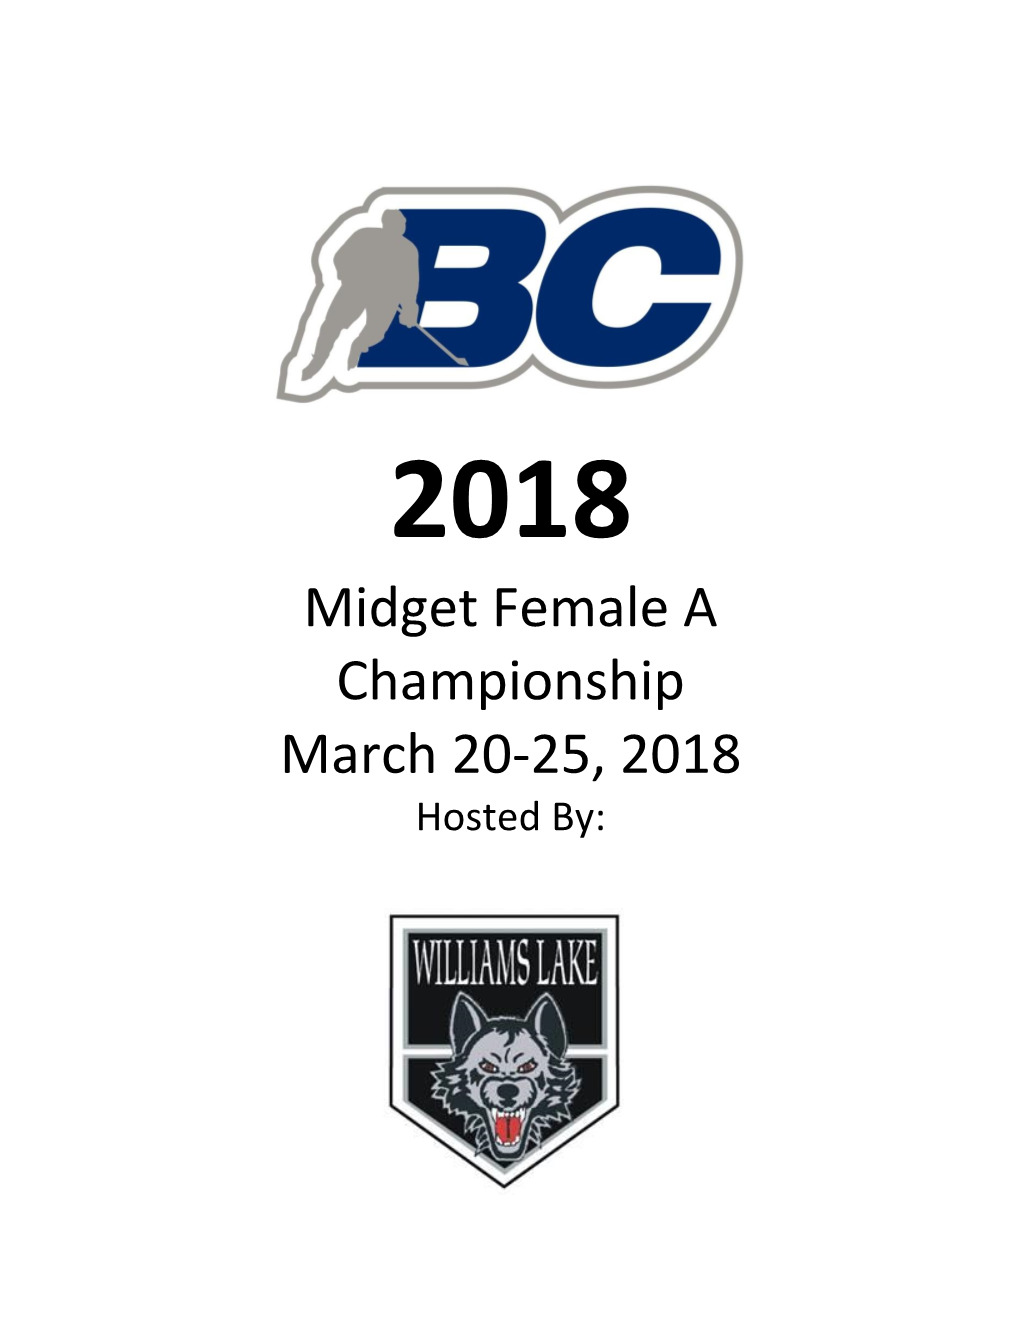 Midget Female a Championship March 20-25, 2018